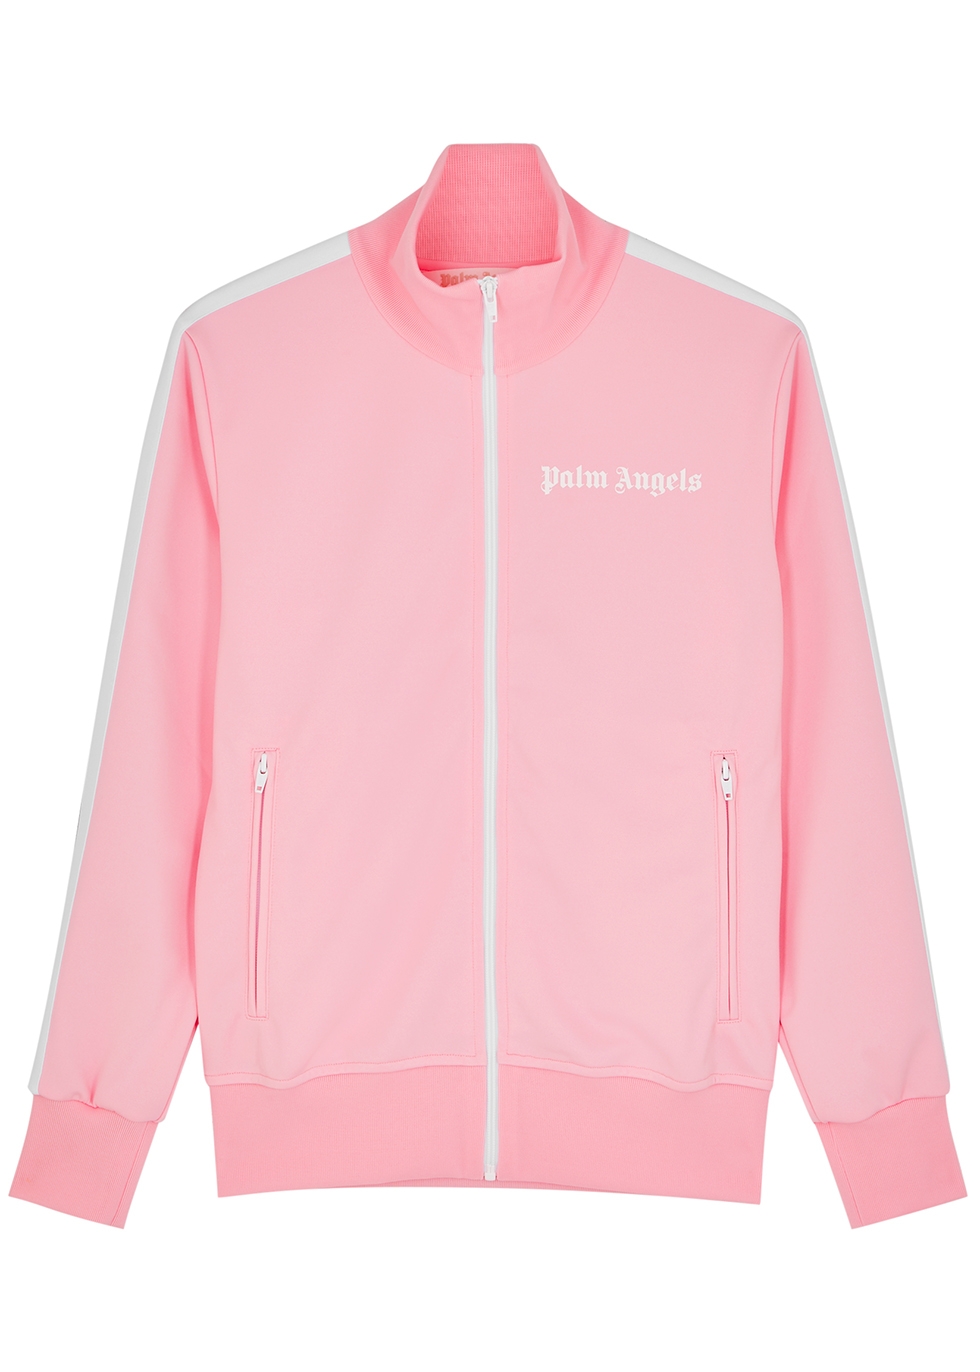 Pink striped jersey track jacket